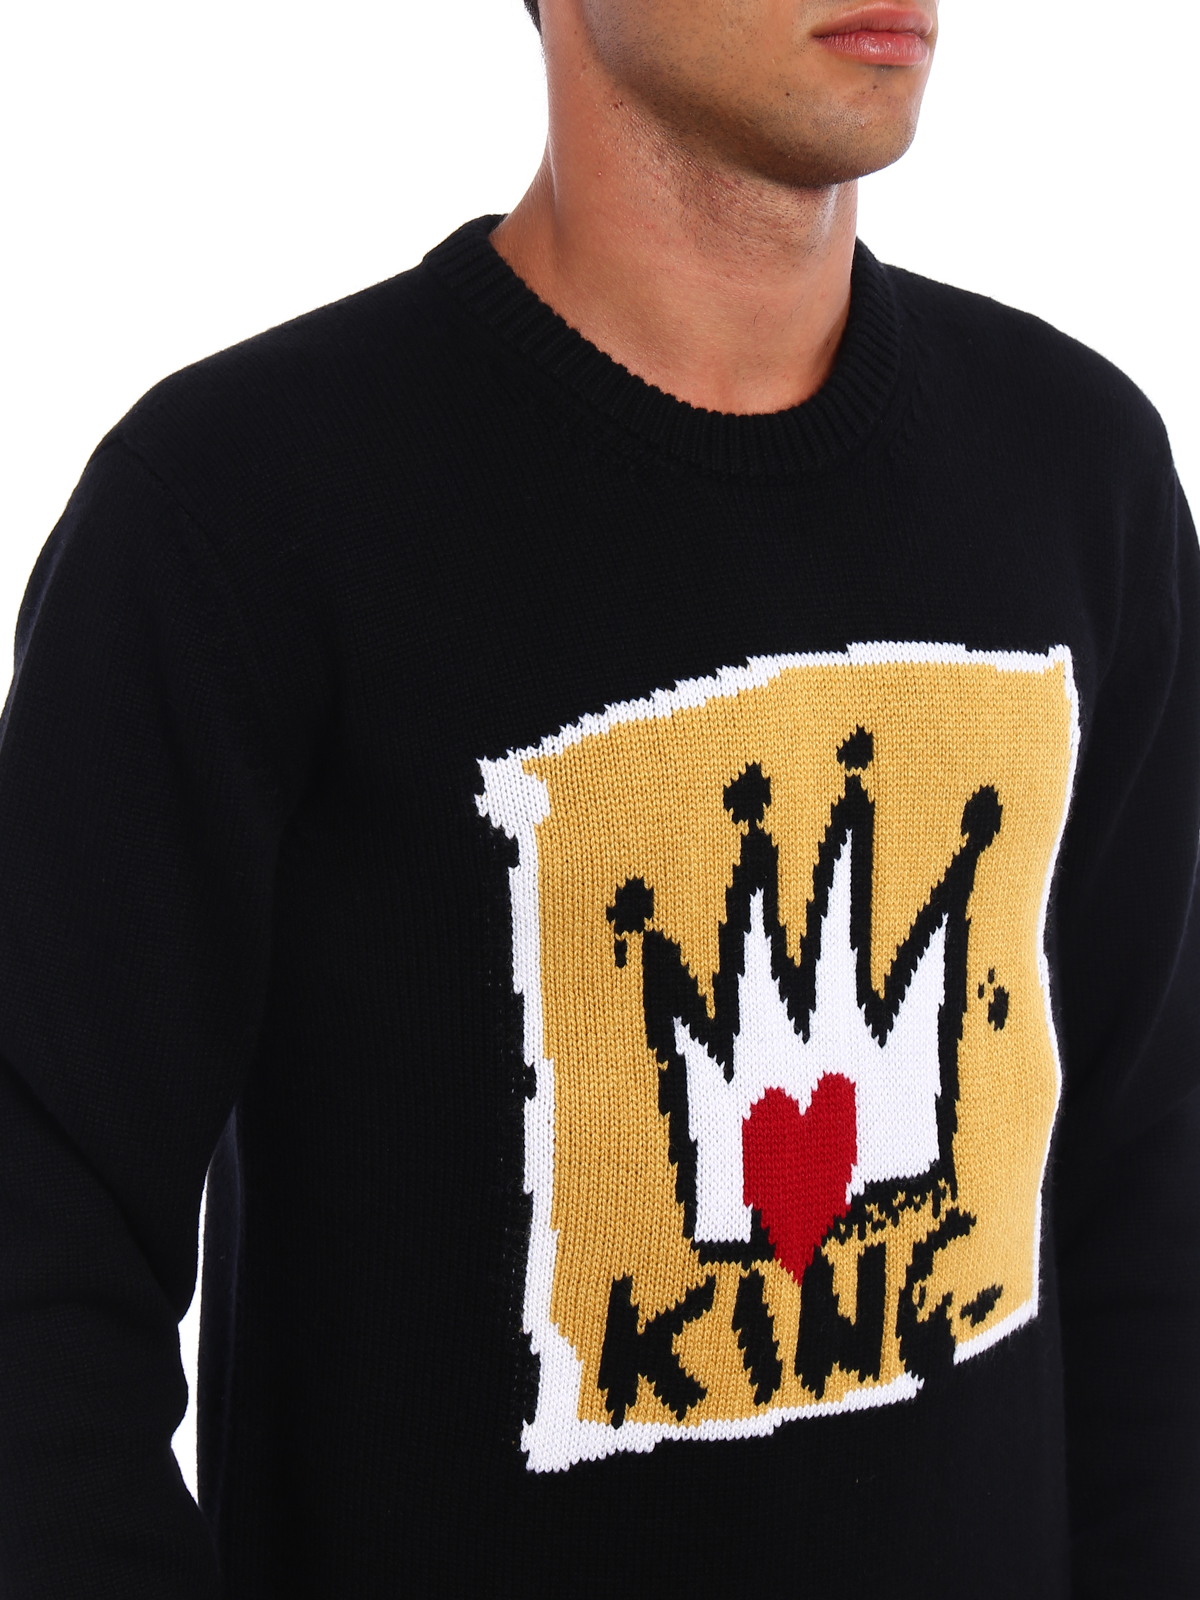 King intarsia cashmere sweater 